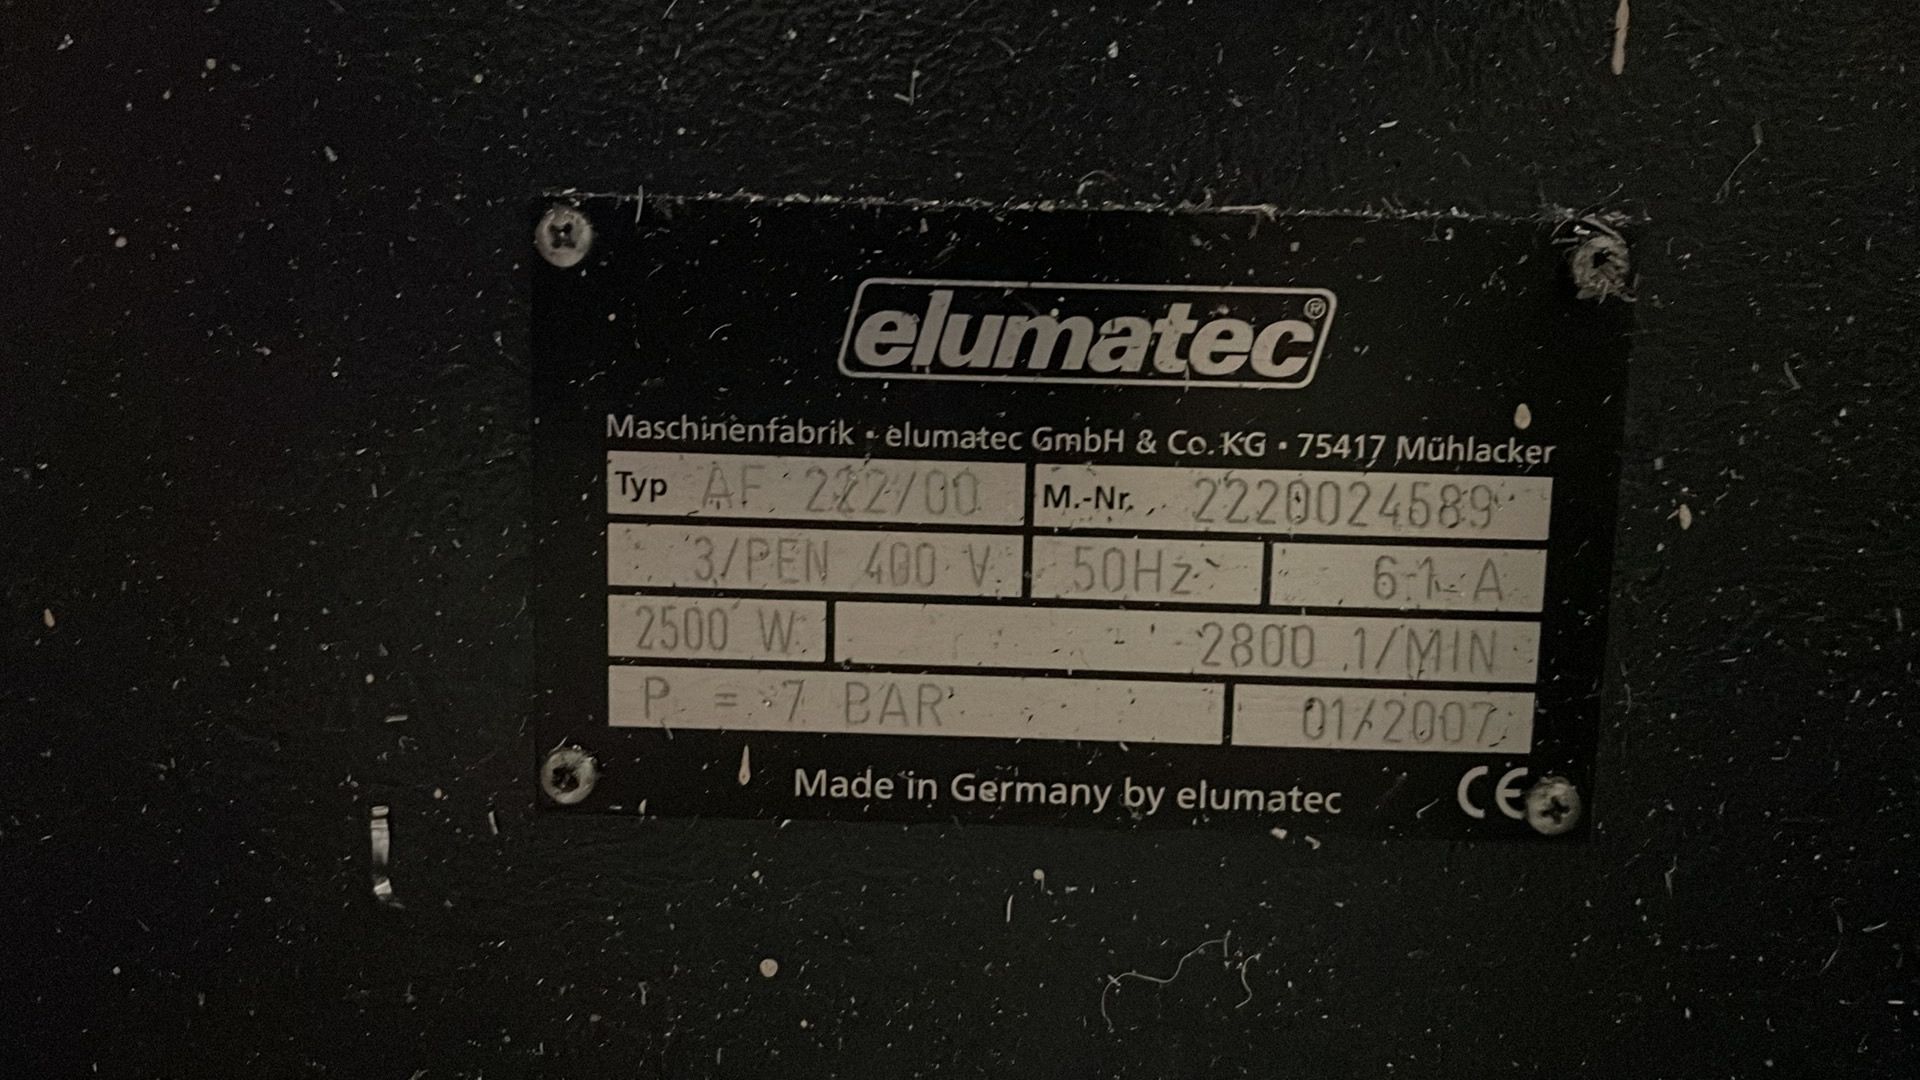 Elumatec 222/00 End Milling Machine, Serial No. 2220024589, 3 Phase, (01/2007) - Bild 2 aus 2